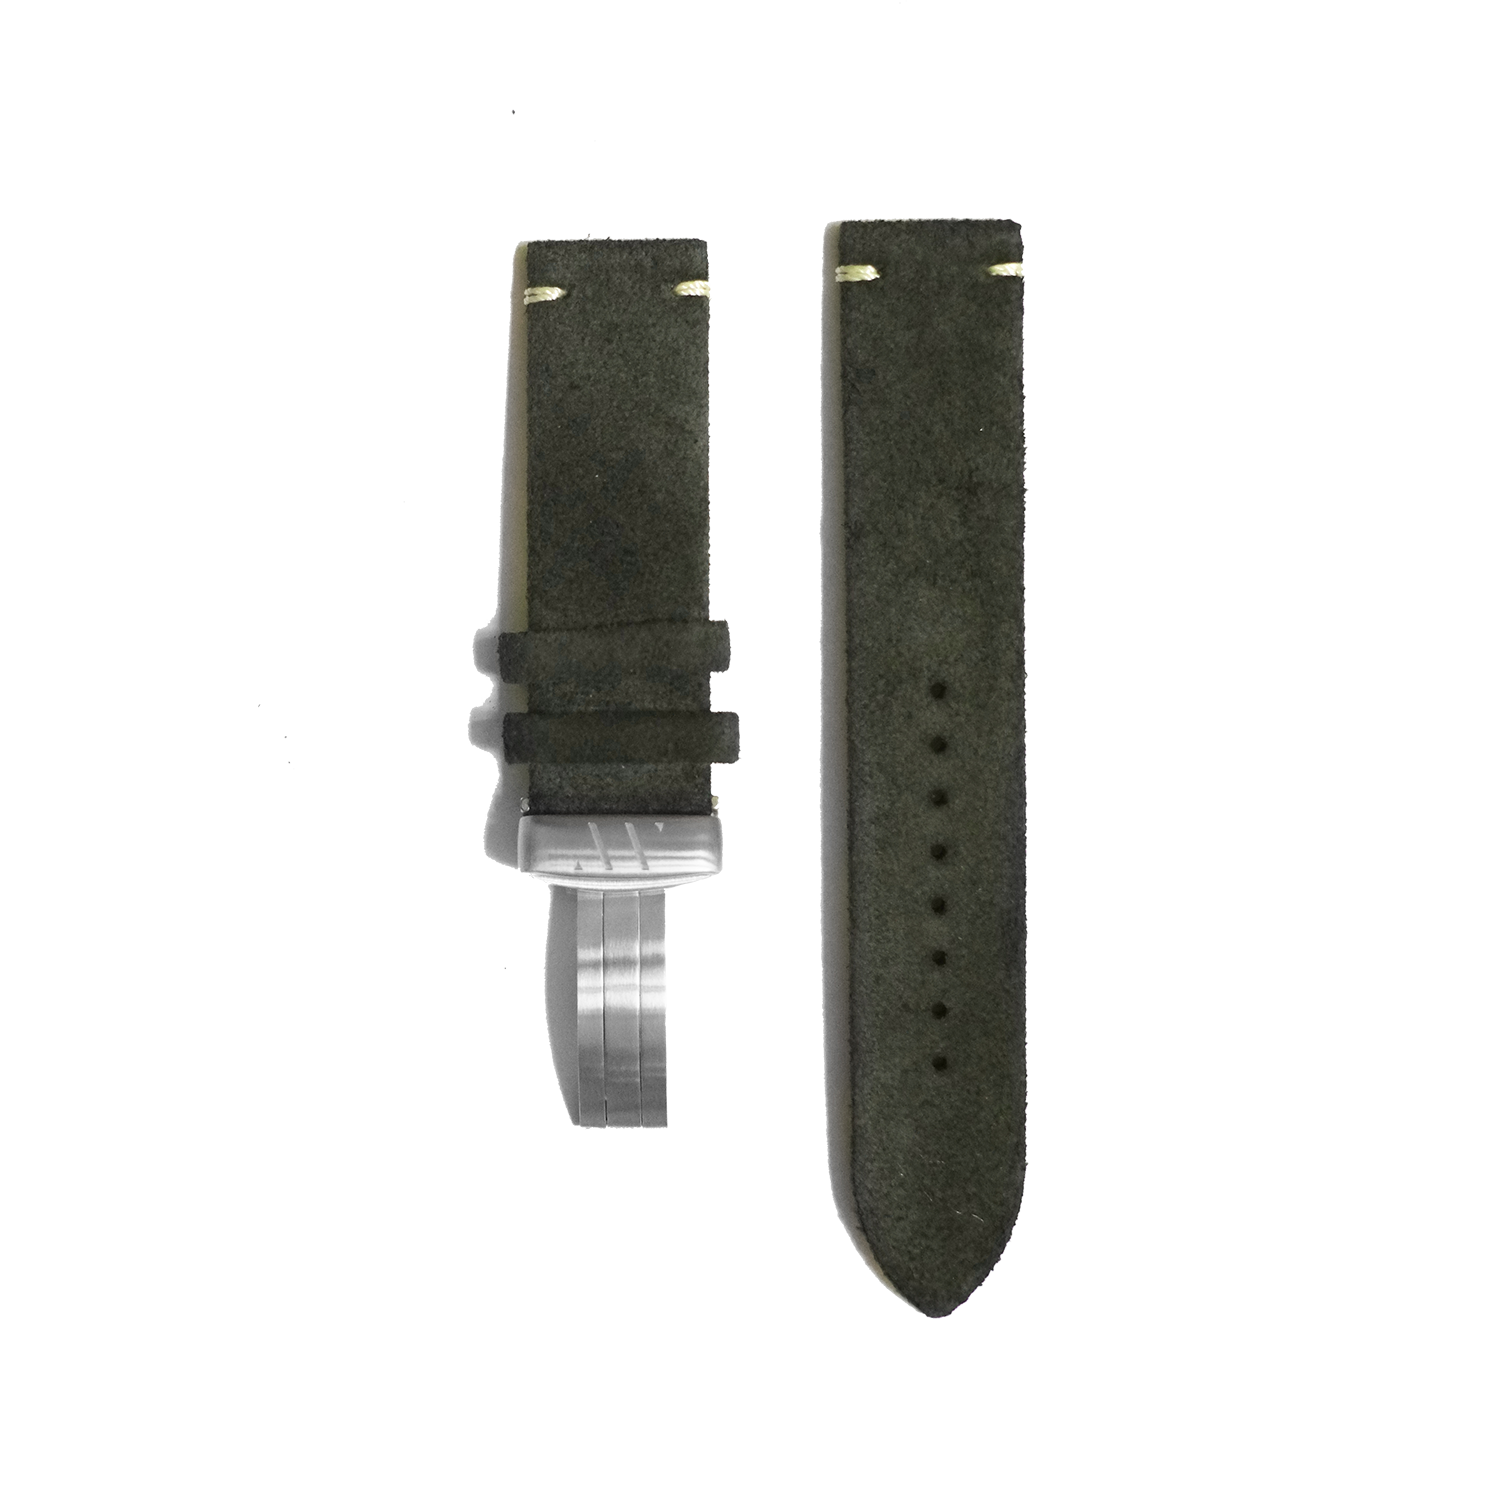 Dark olive suede strap with contrast stitching